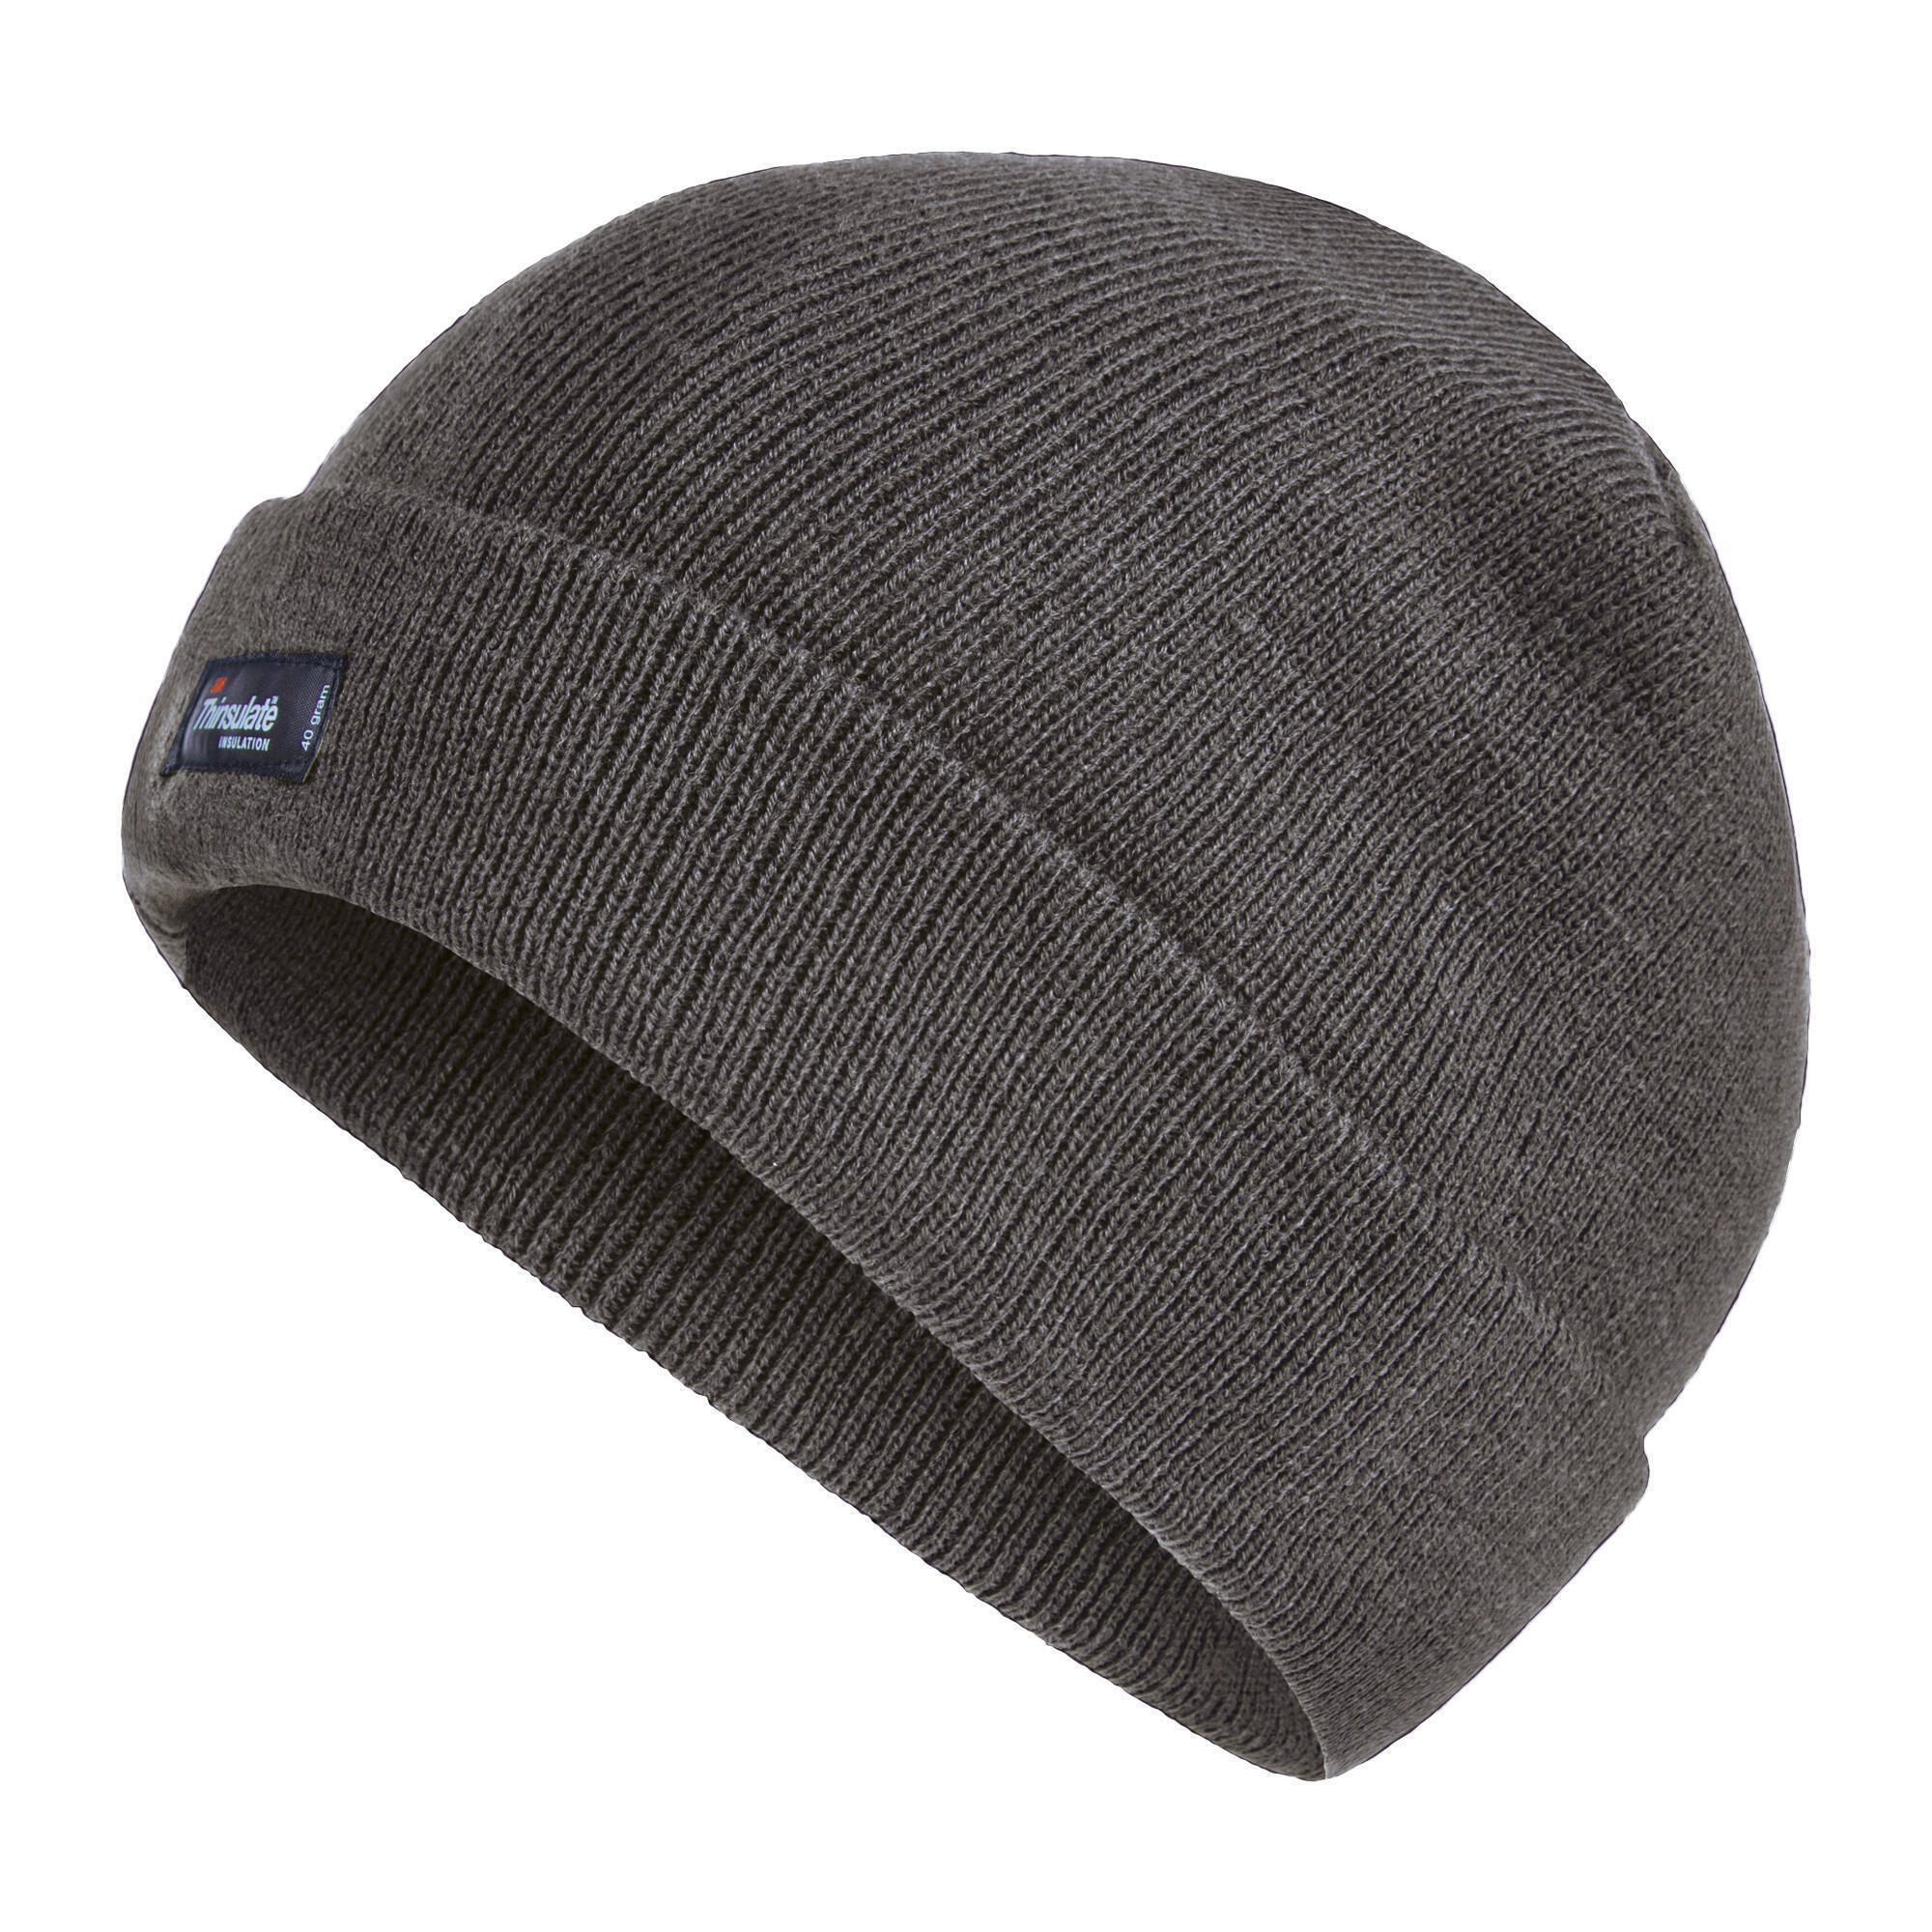 REGATTA Unisex Thinsulate Lined Winter Hat (Seal Grey)